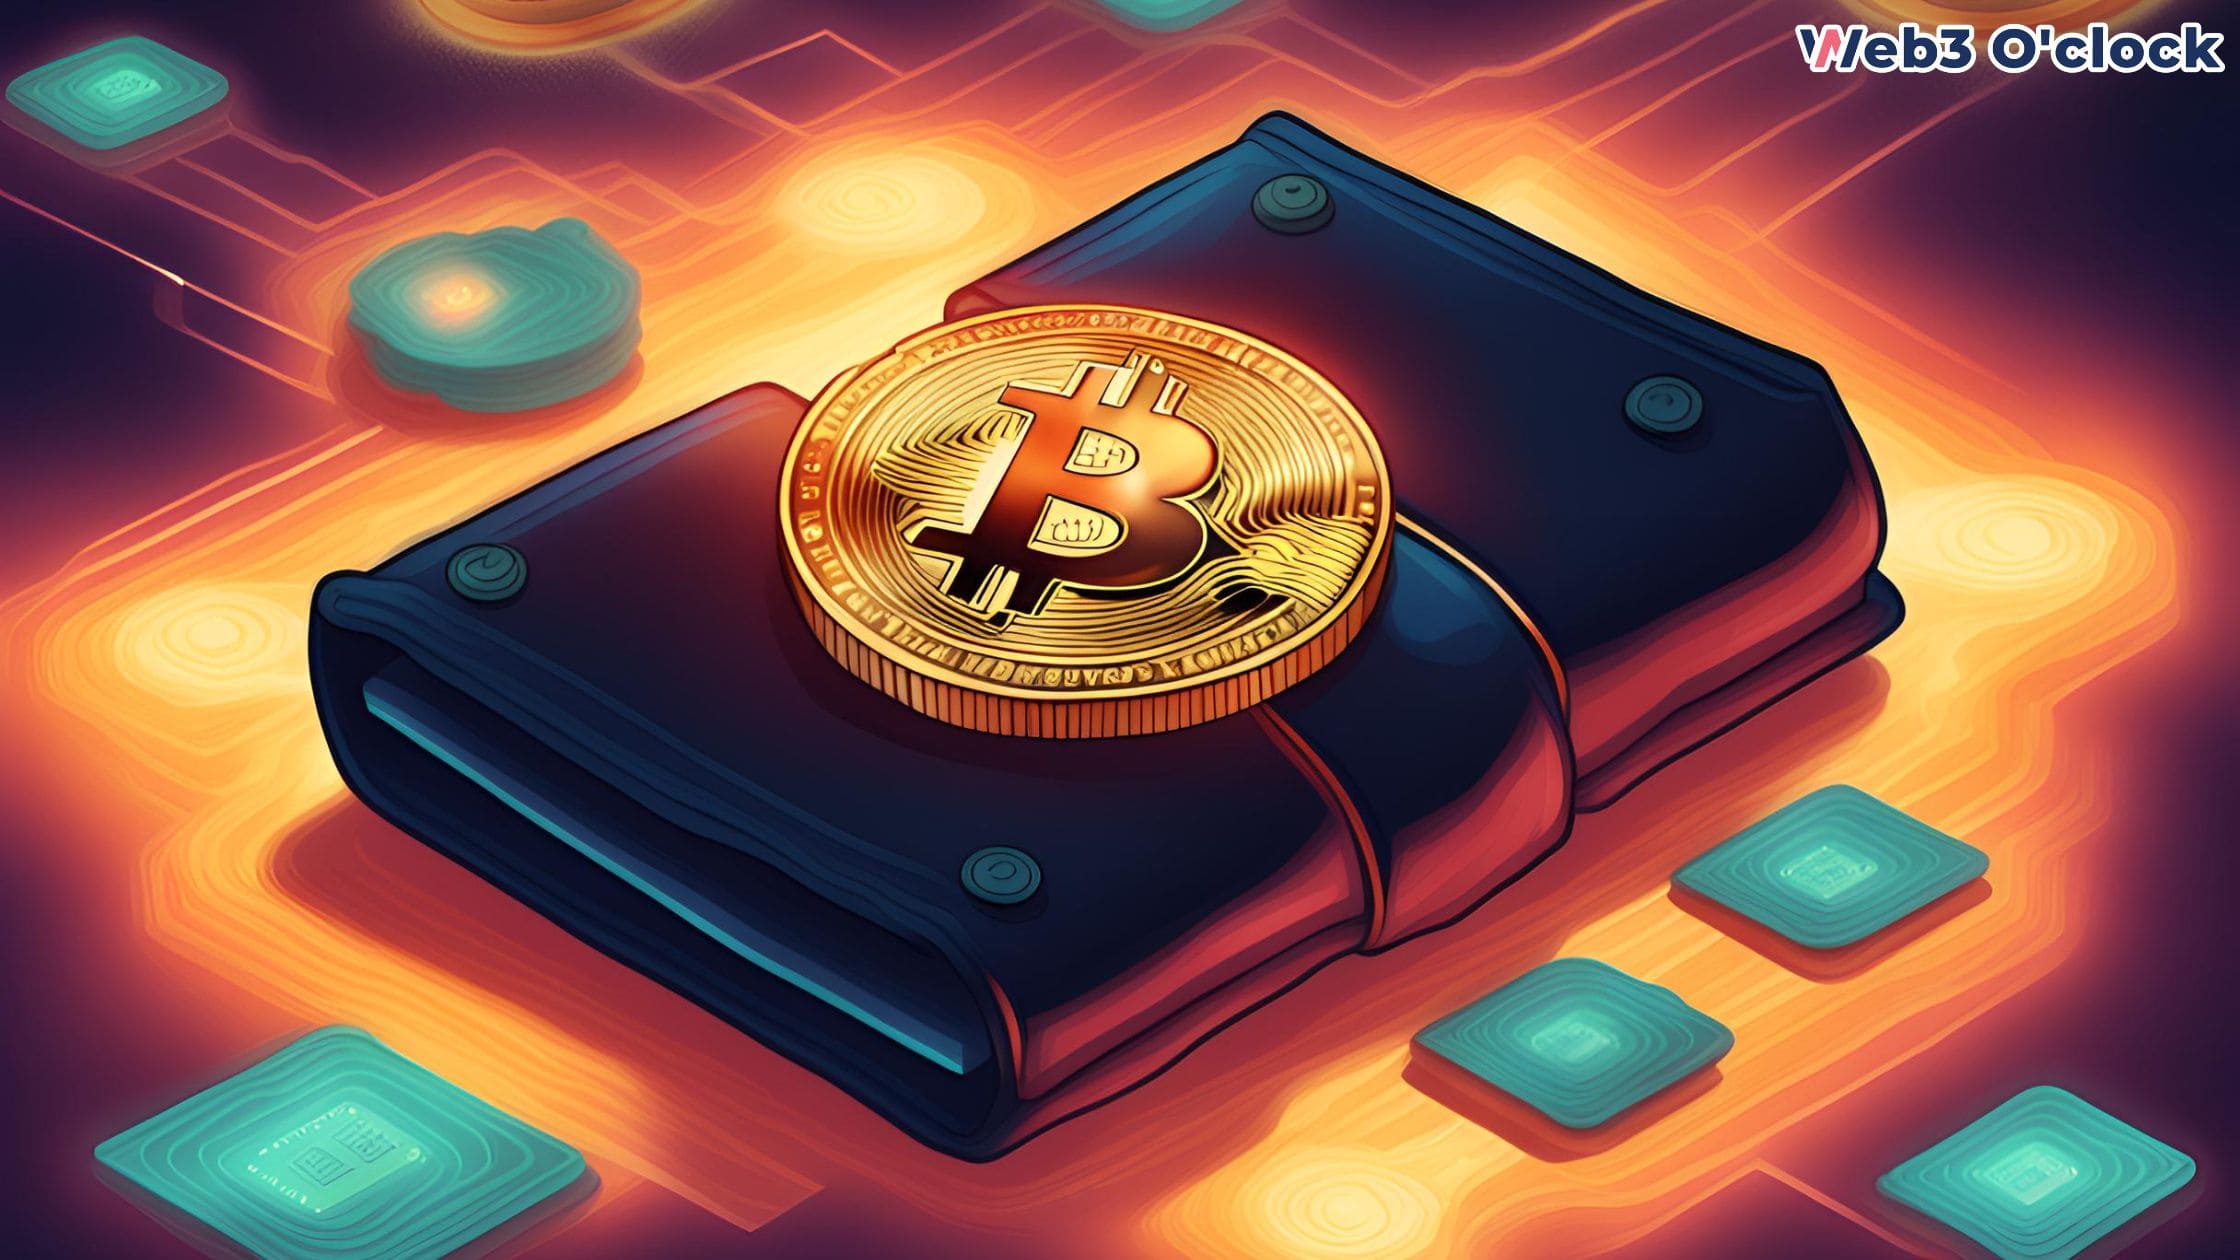 Bitcoin Back from Satoshi's Wallet by web3 o'clock